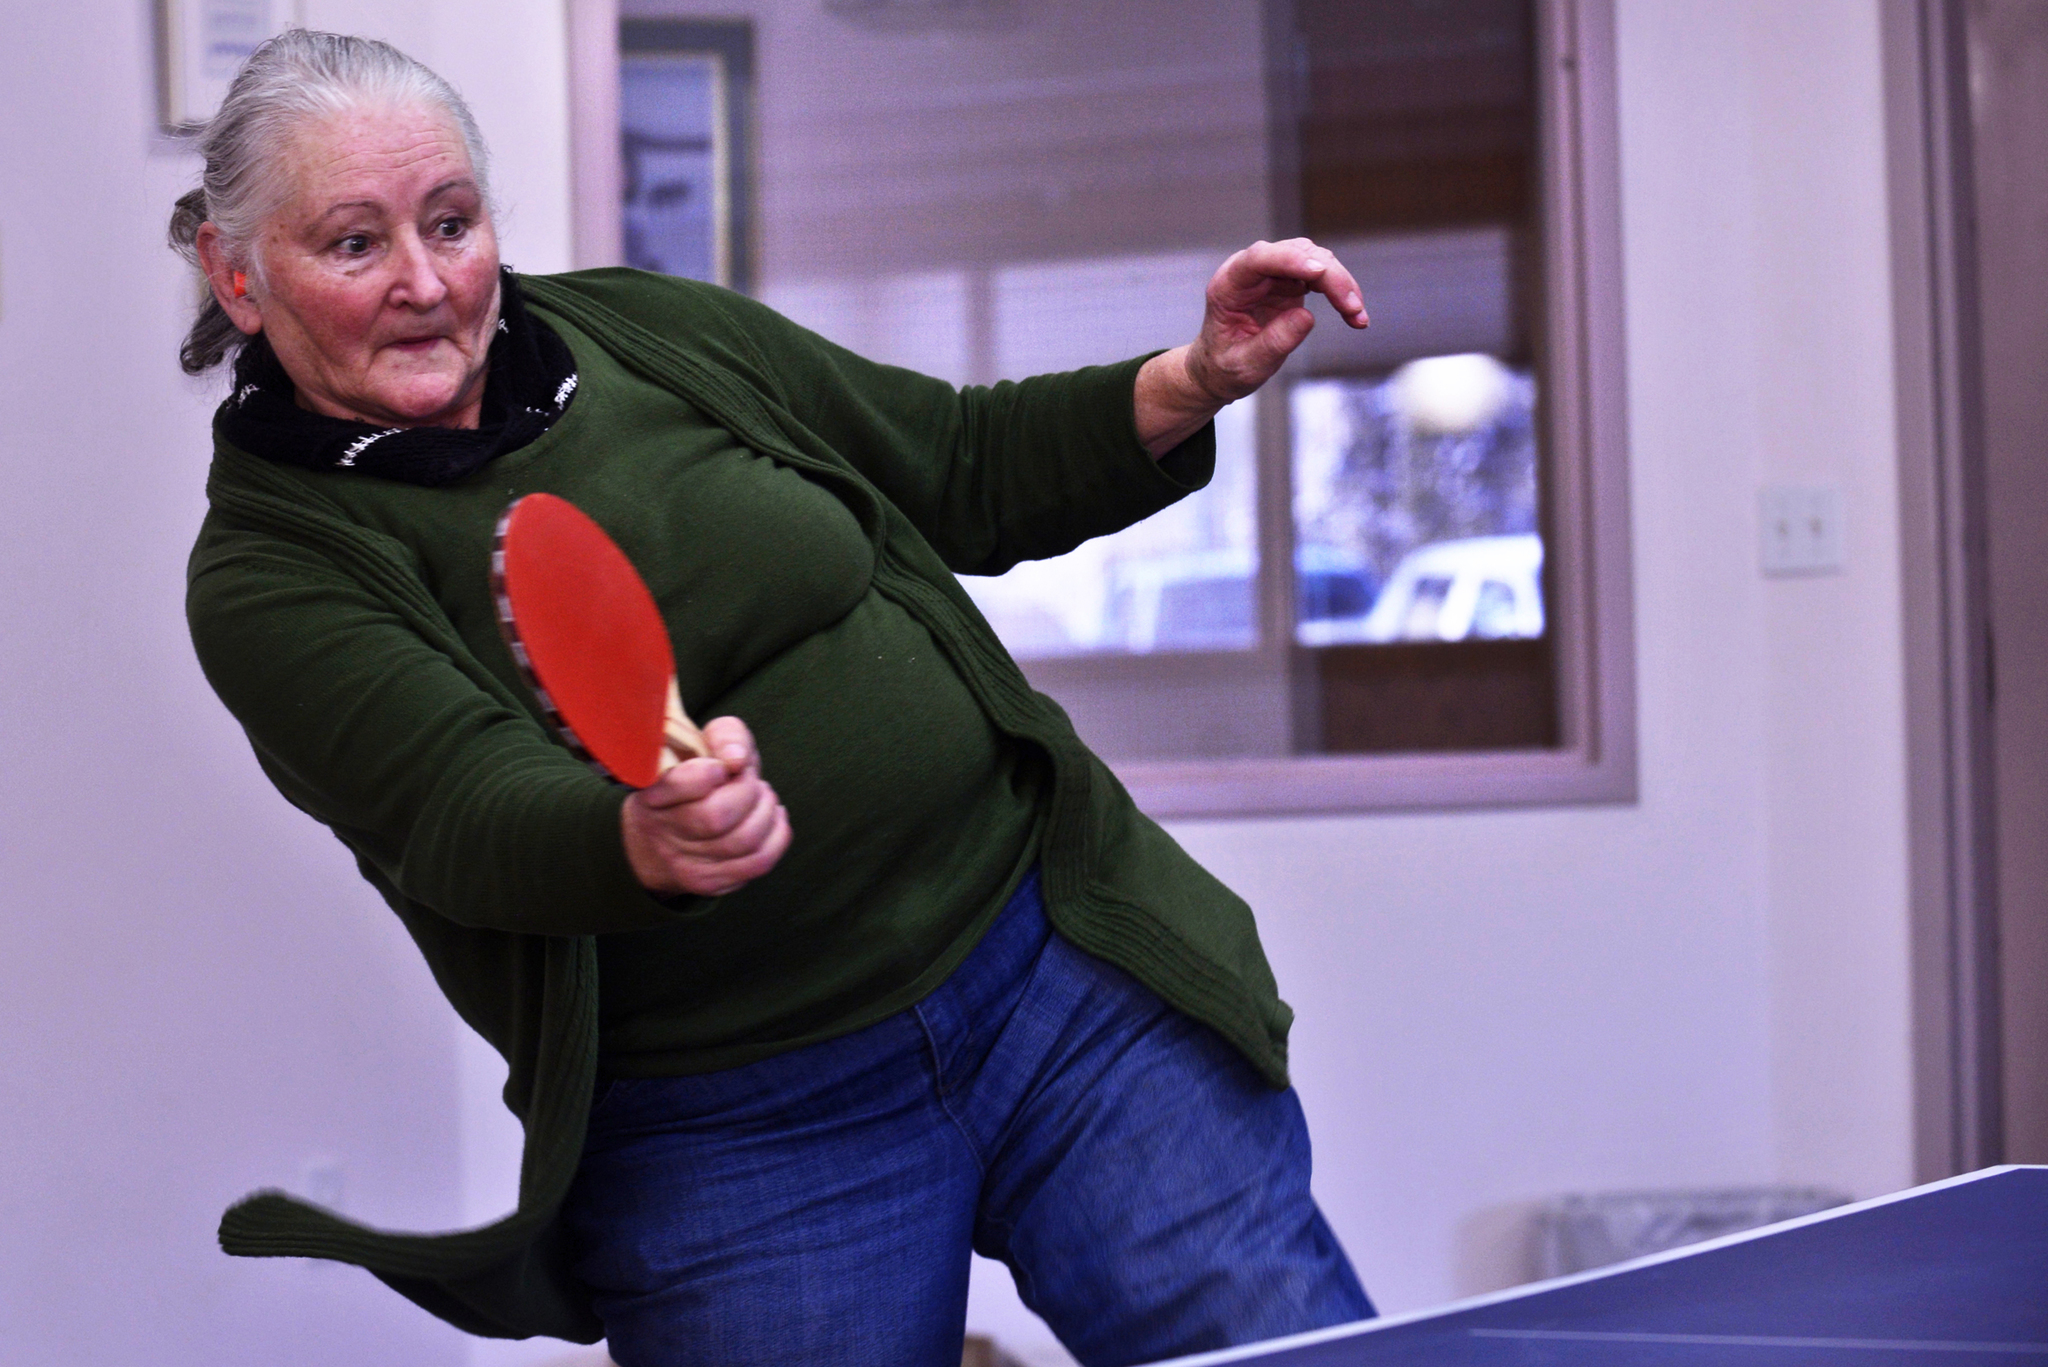 Deborah Thomas takes a swing during a game of ping pong on Saturday, Feb. 25, 2017 at the Soldotna Senior Center in Soldotna, Alaska. (Ben Boettger/Peninsula Clarion)